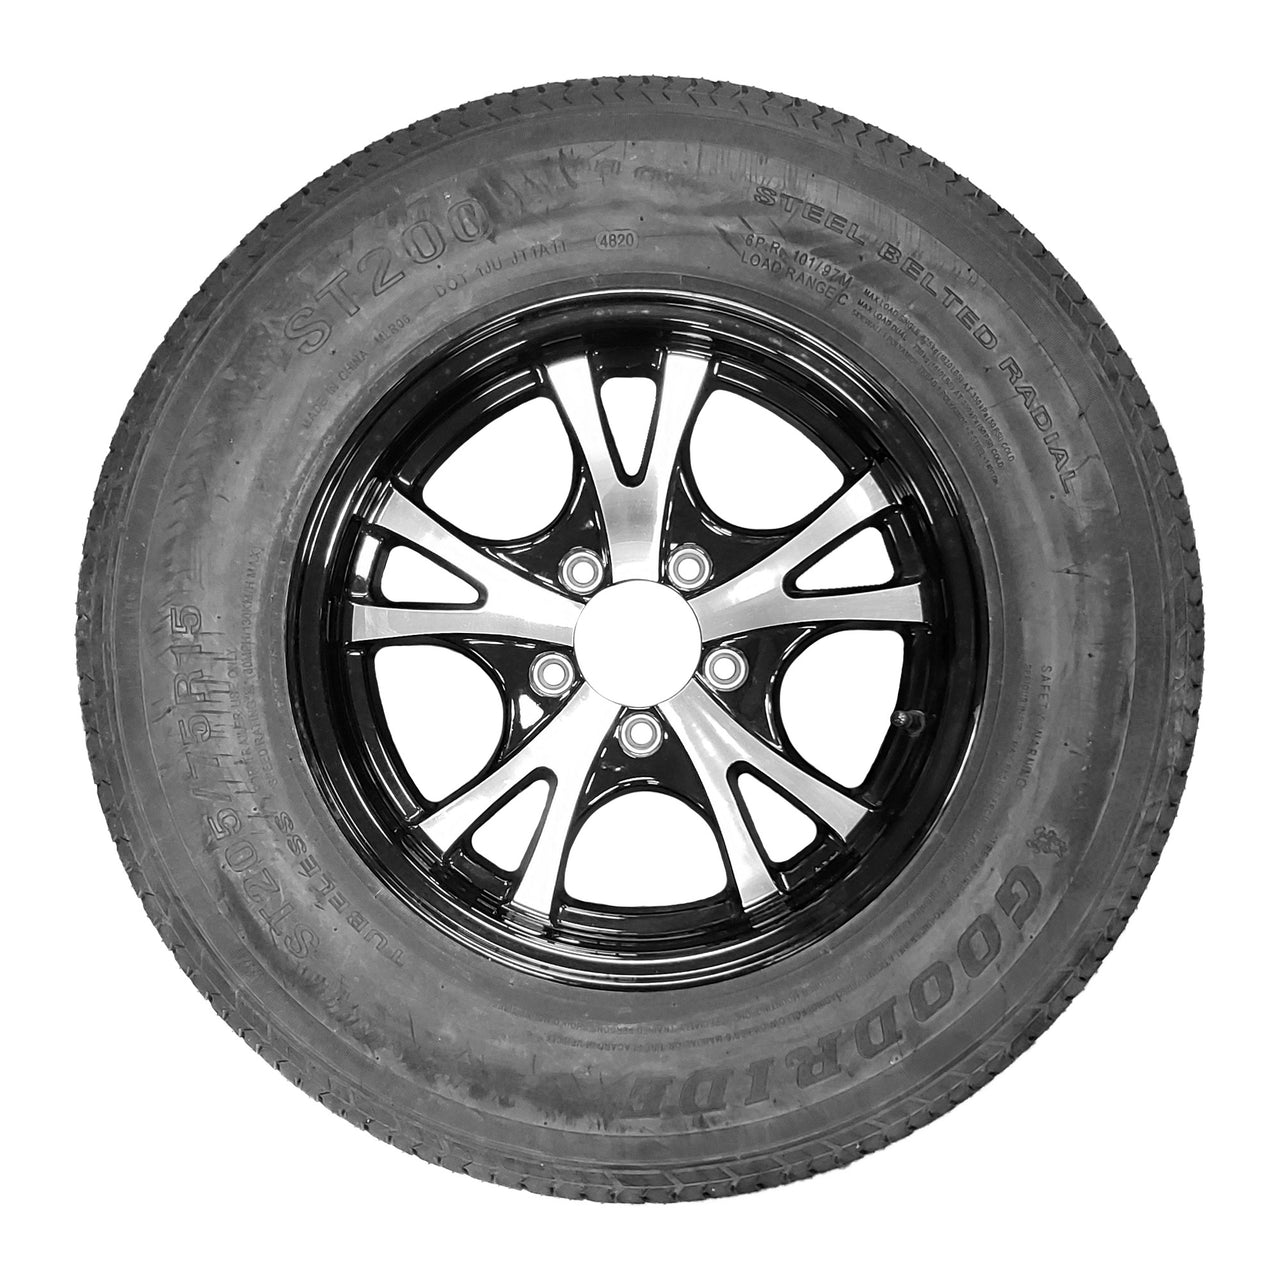 ST205/75R15 Trailer Tire w/ 15" Aluminum Wheel